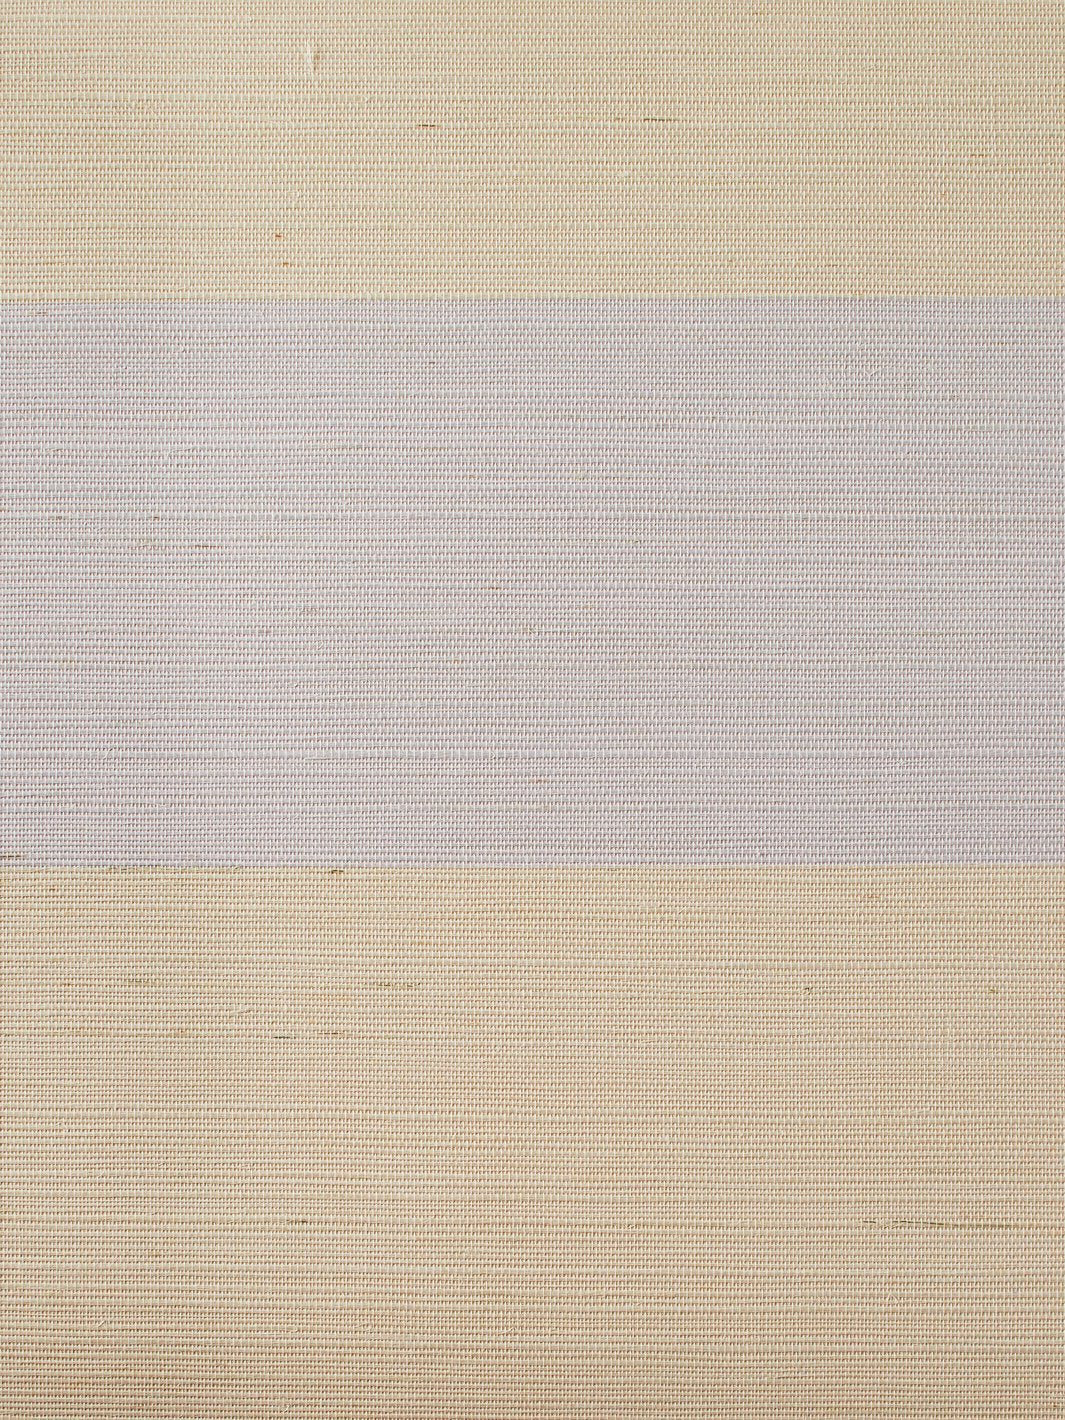 'Wide Stripe Two Color' Grasscloth' Wallpaper by Wallshoppe - Peach Lavender